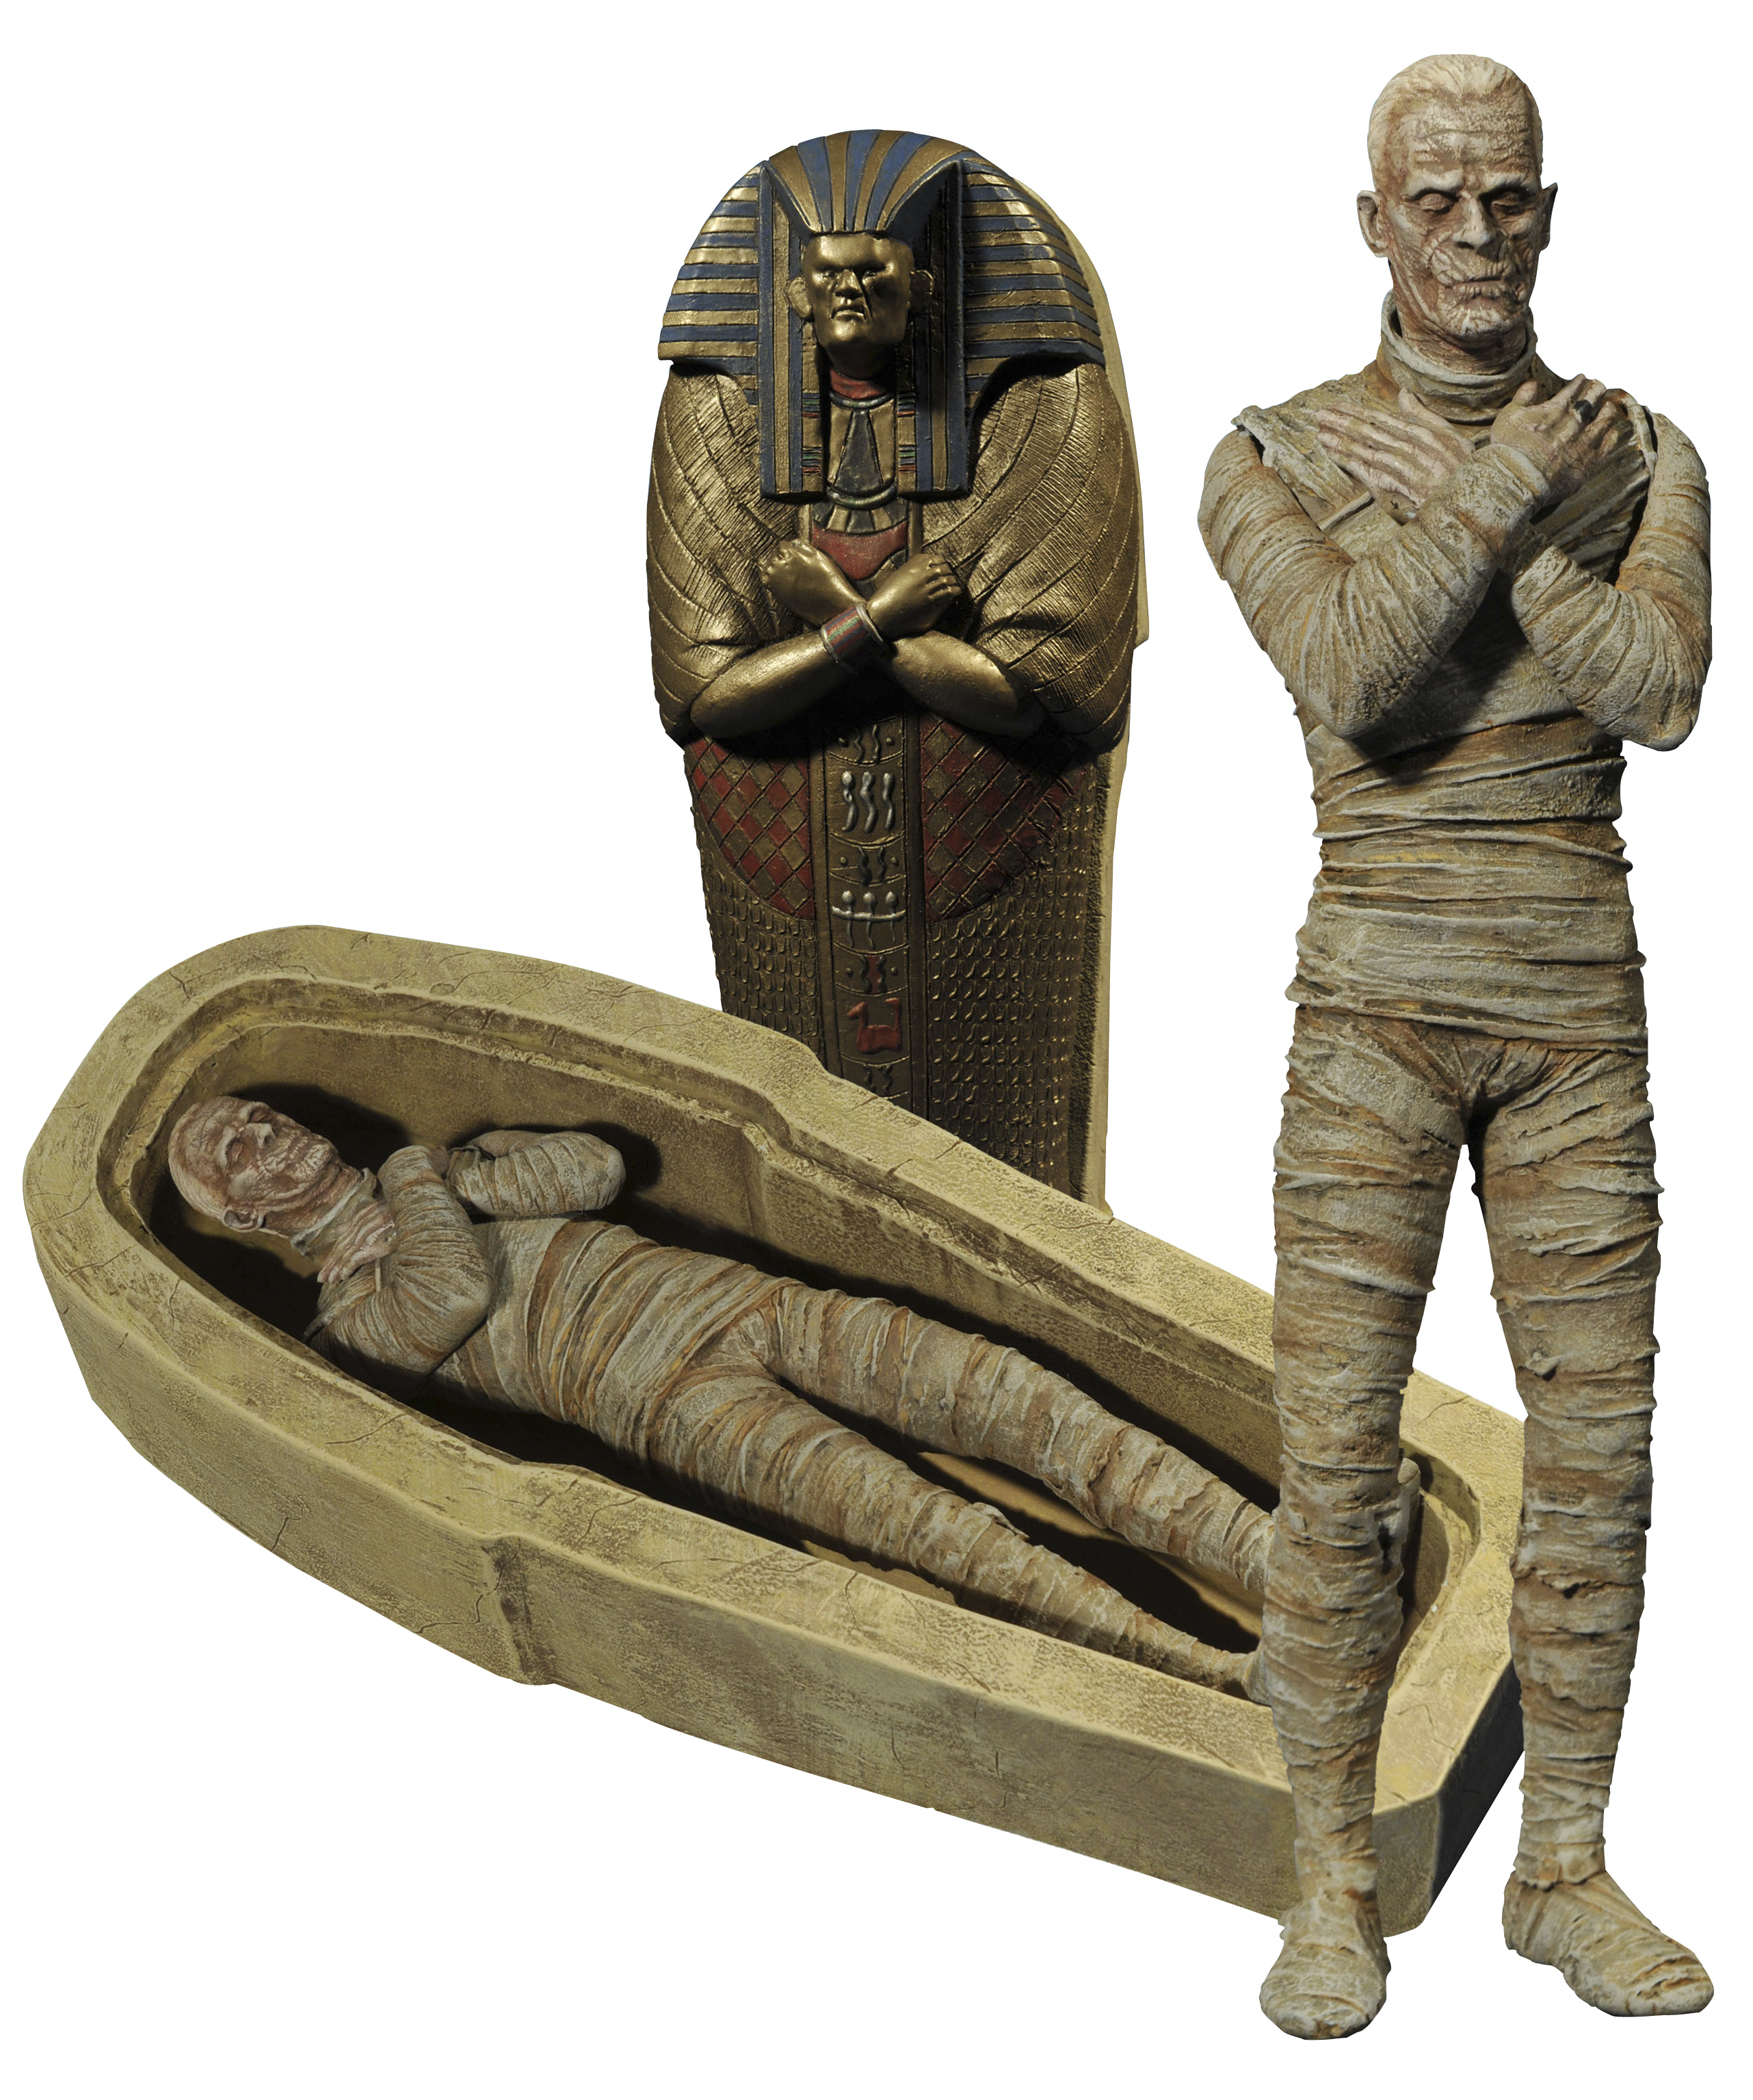 Mummy chair. Имхотеп Мумия саркофаг. Мумия Имхотепа фигурки. Мумификация Имхотепа Мумия.